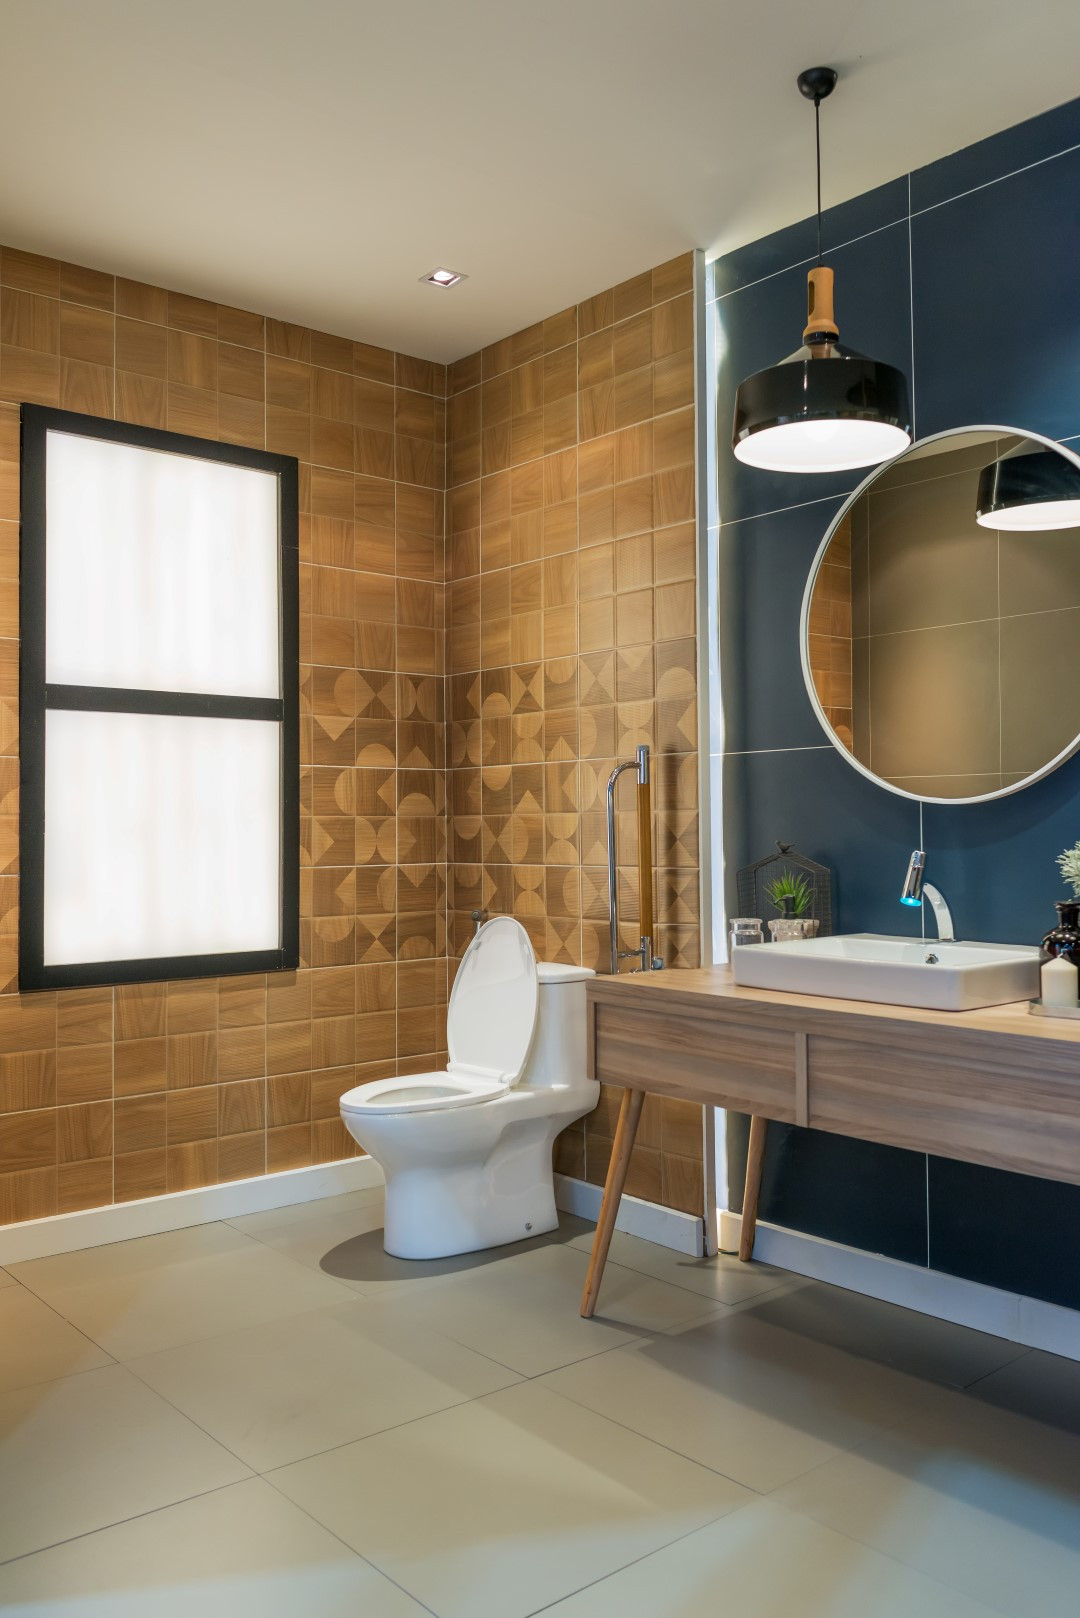 Best Tile For Bathroom
 The 6 Top Bathroom Tile Trends of 2018